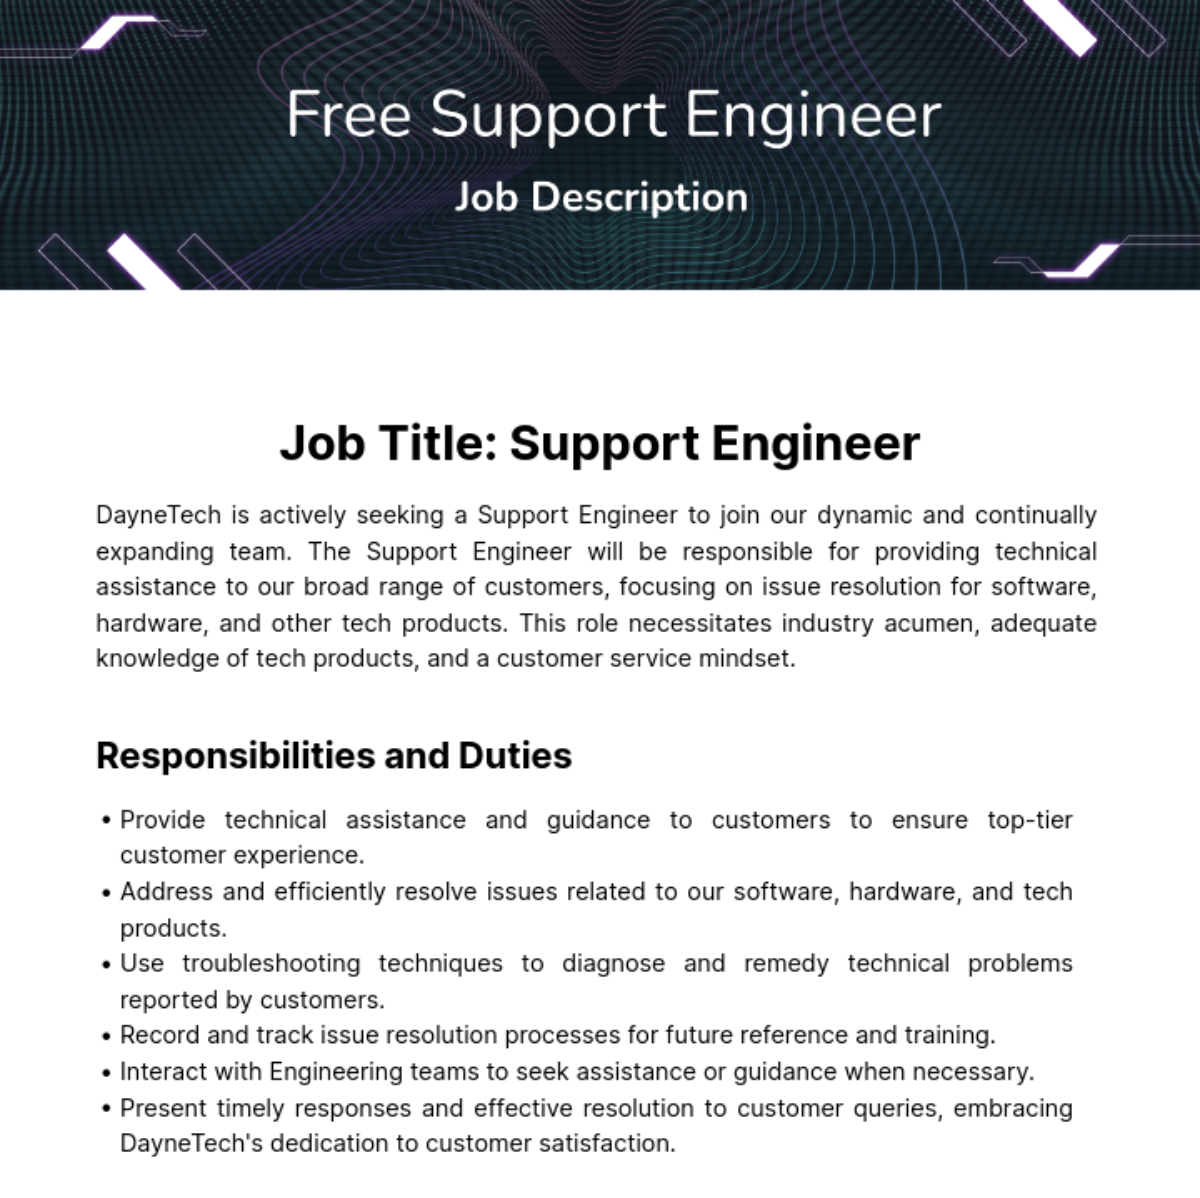 Free Support Engineer Job Description Template